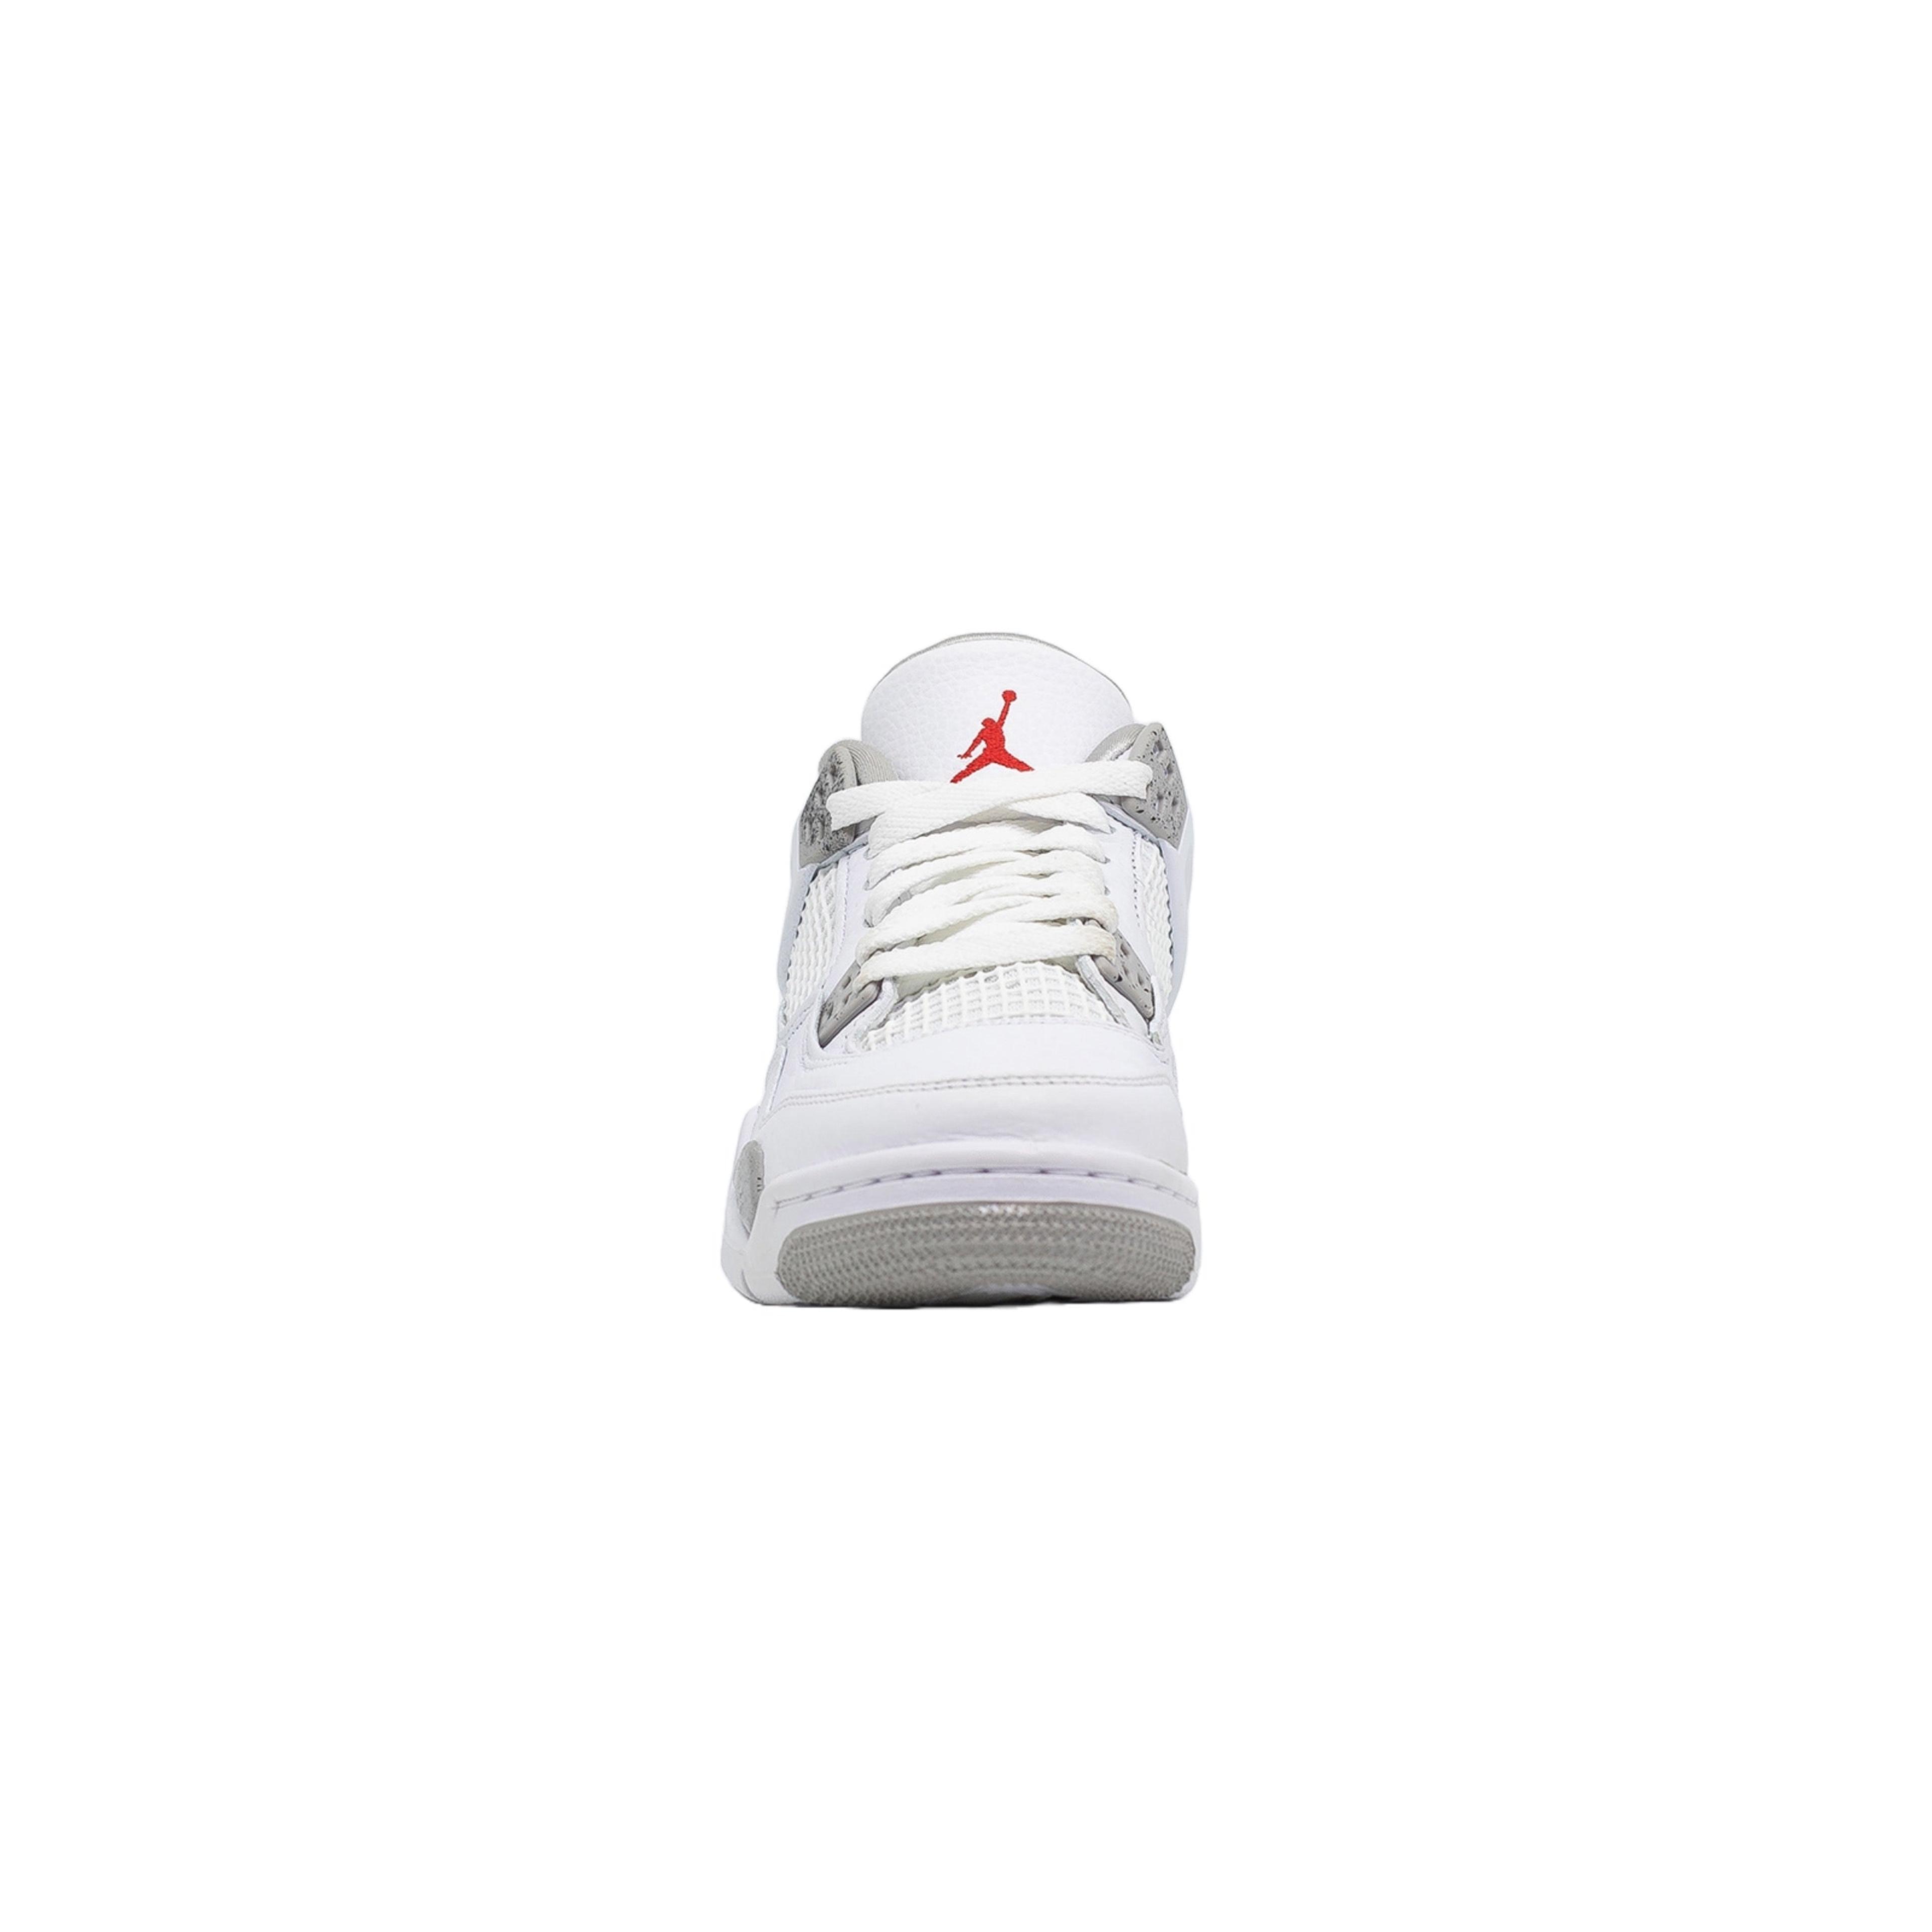 Alternate View 3 of Air Jordan 4, White Oreo